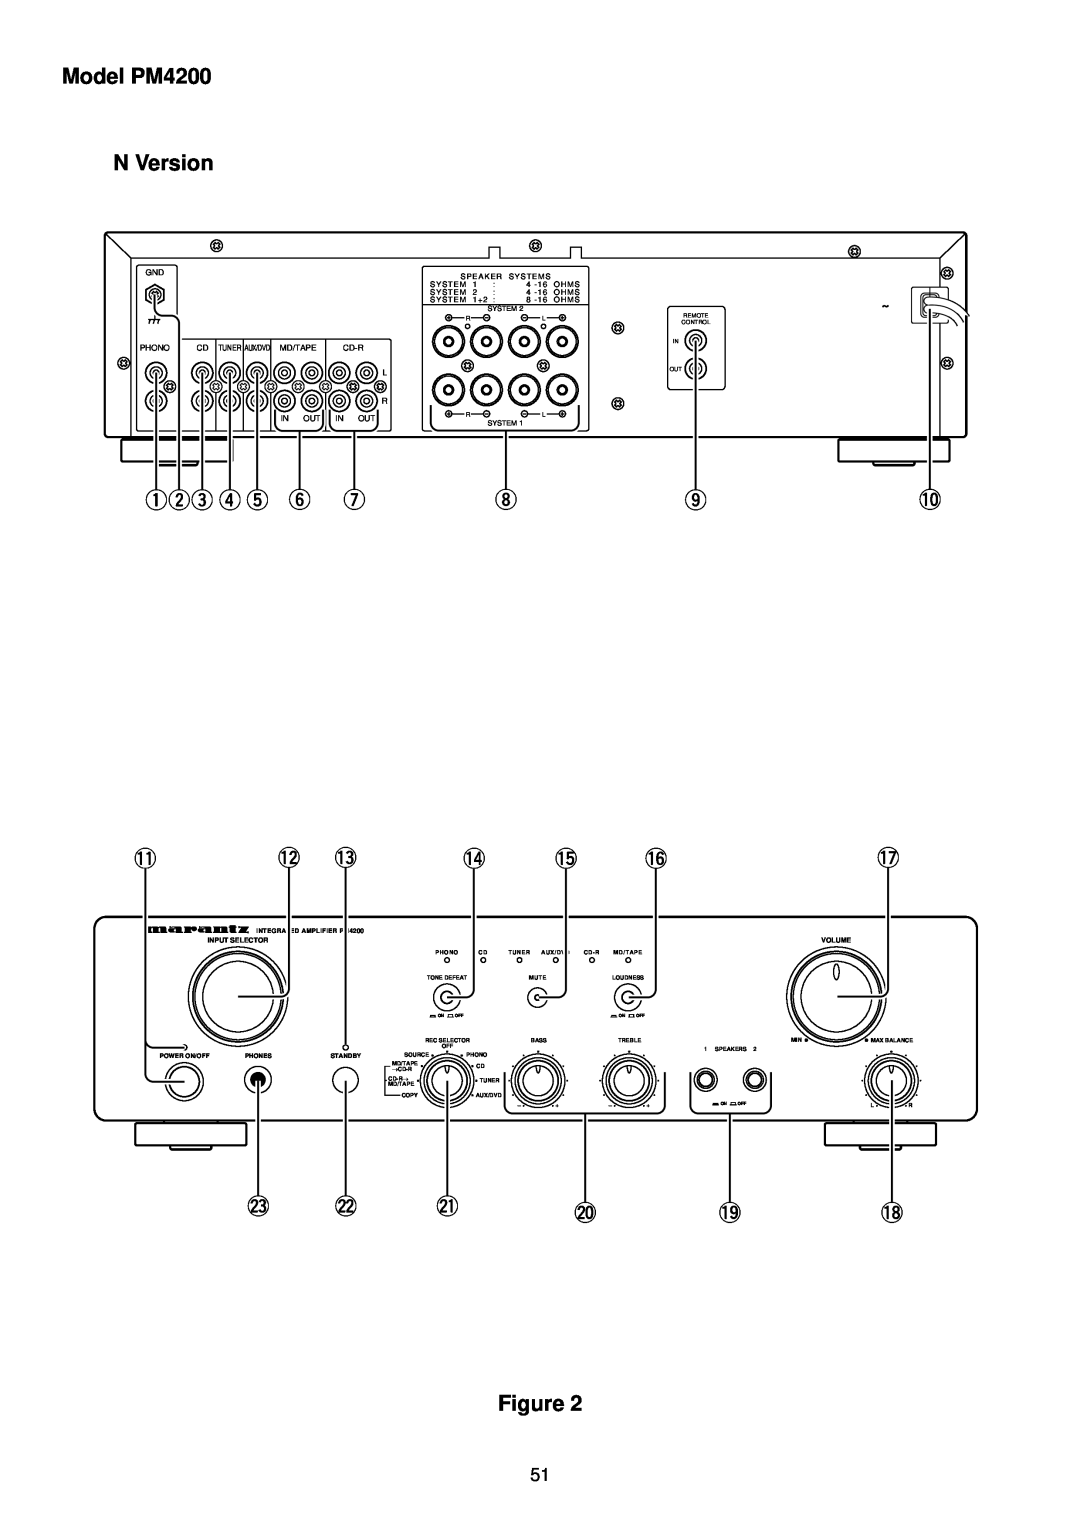 Marantz manual Model PM4200 N Version, qwertyuL 